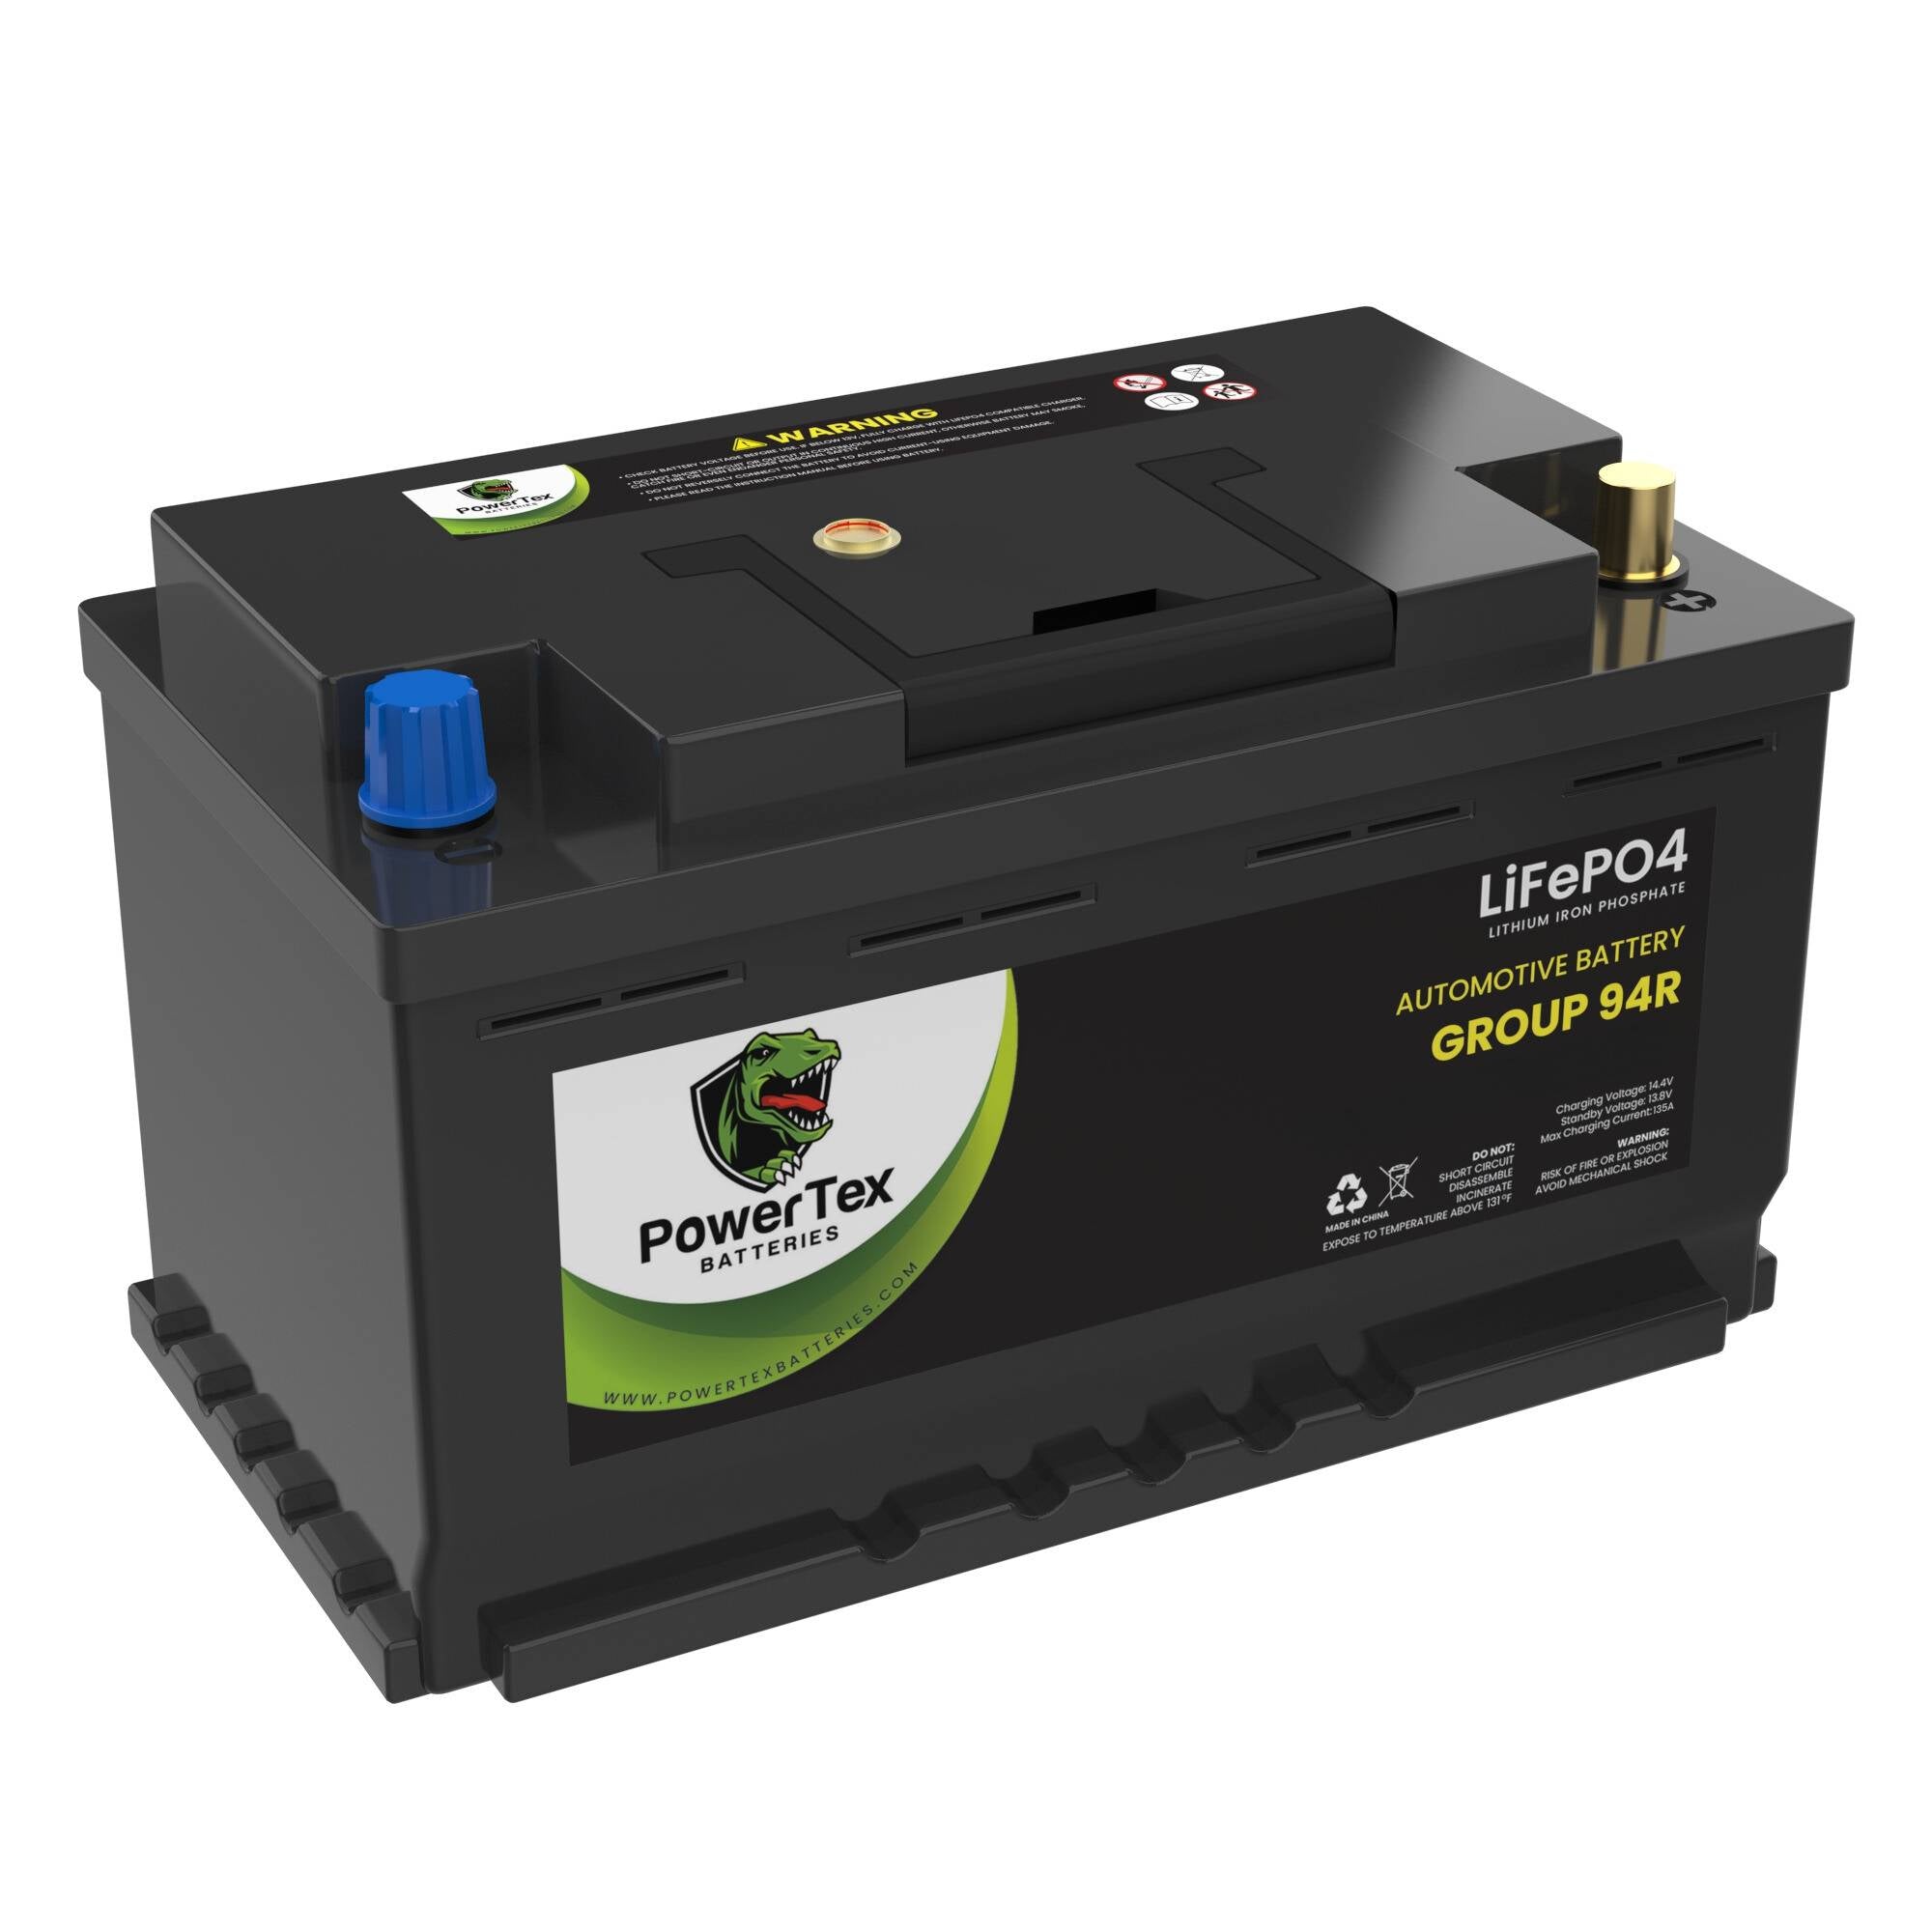 2014 Jaguar XF Car Battery BCI Group 94R / H7 Lithium LiFePO4 Automotive Battery